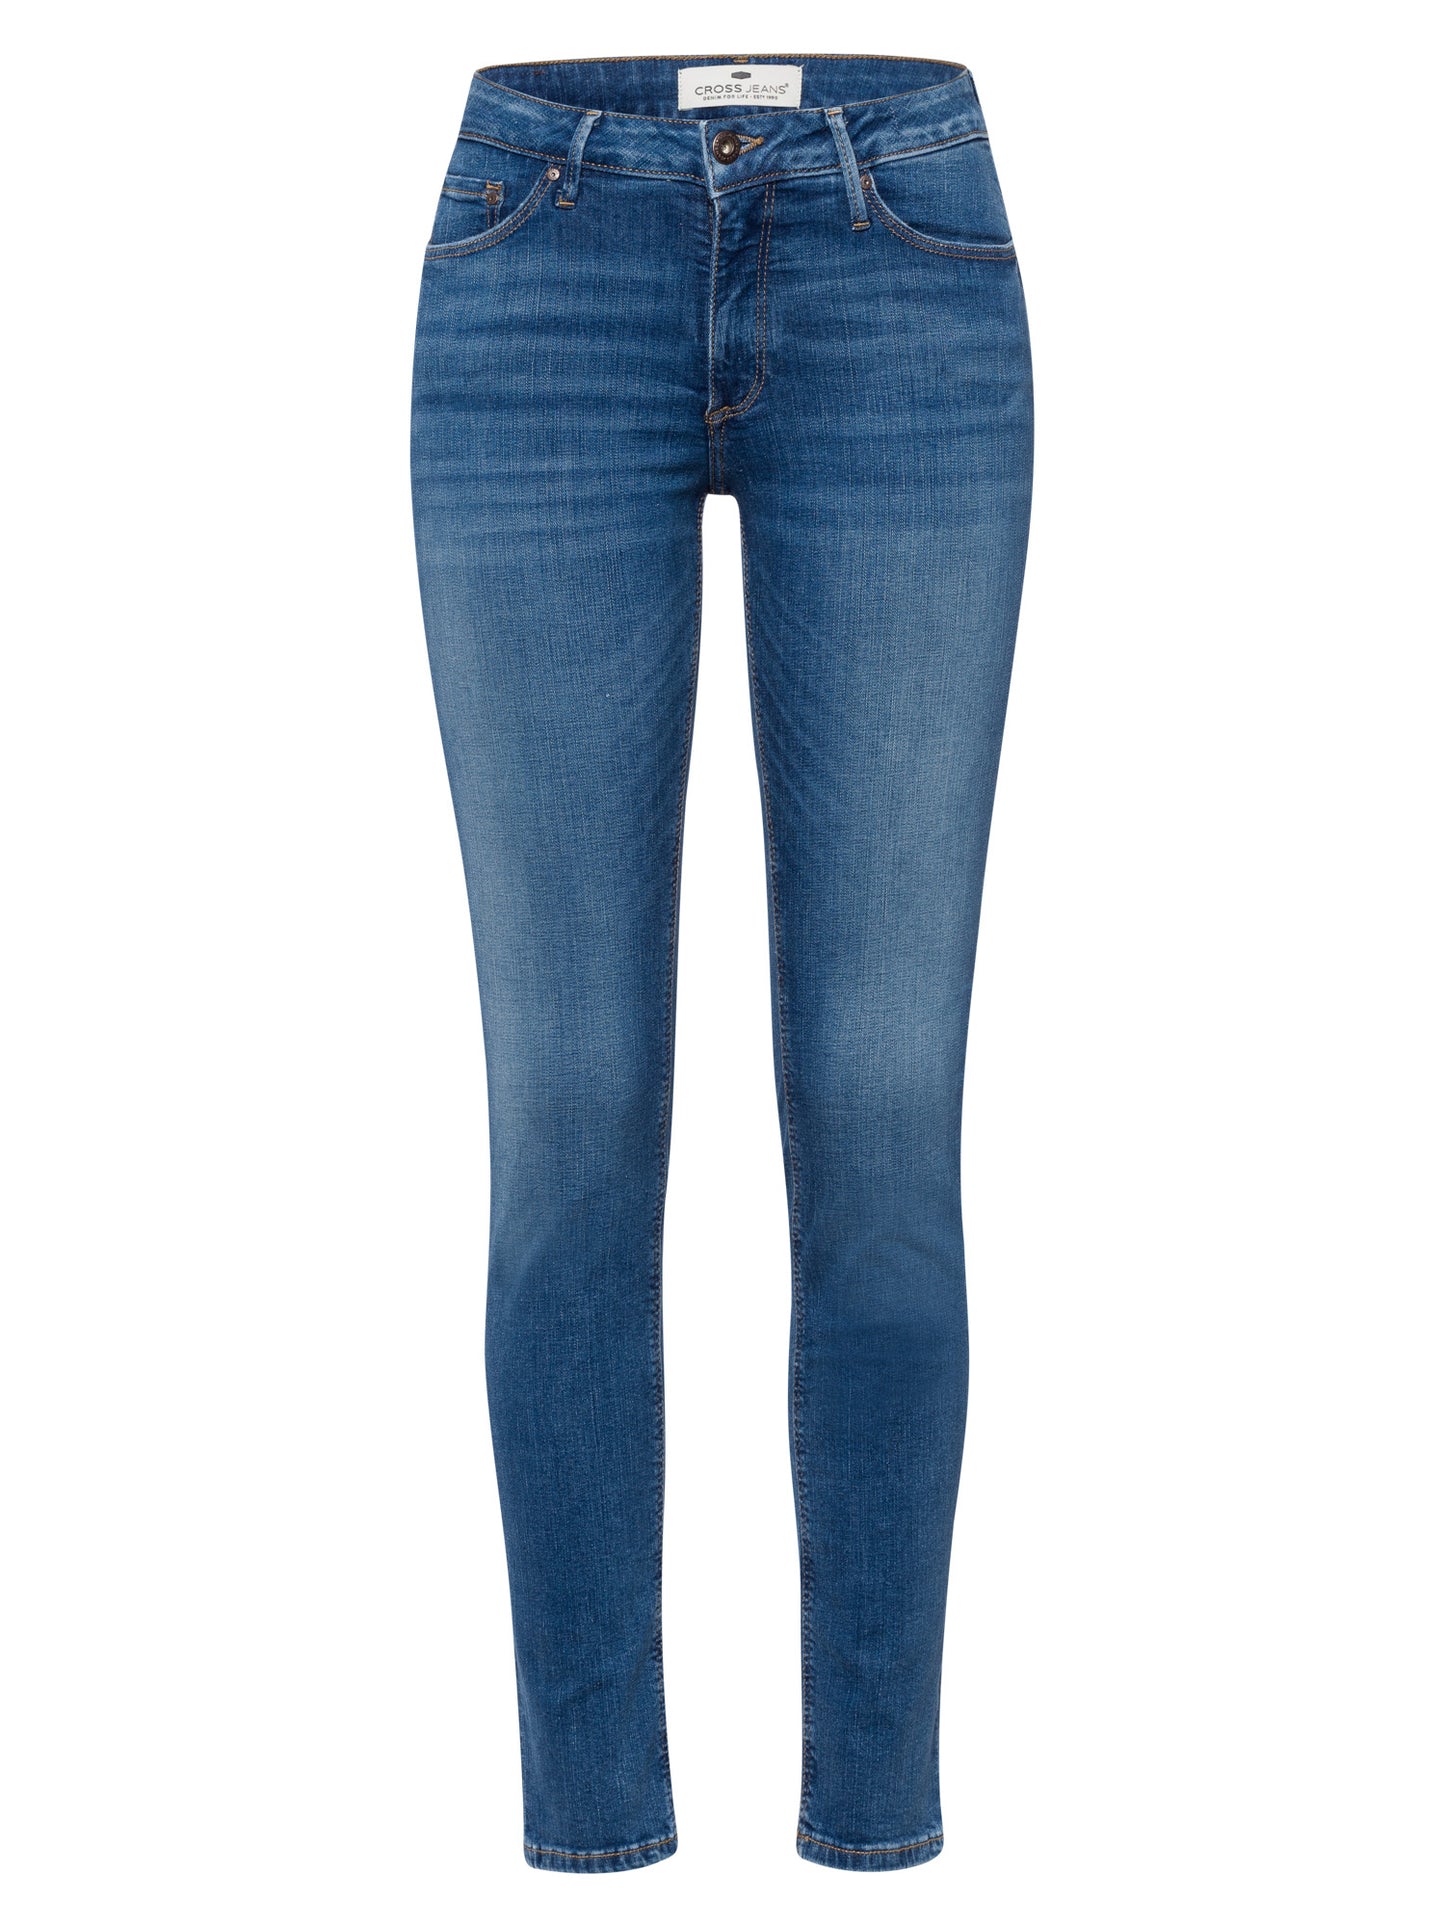 Alan women's jeans skinny fit high waist medium blue